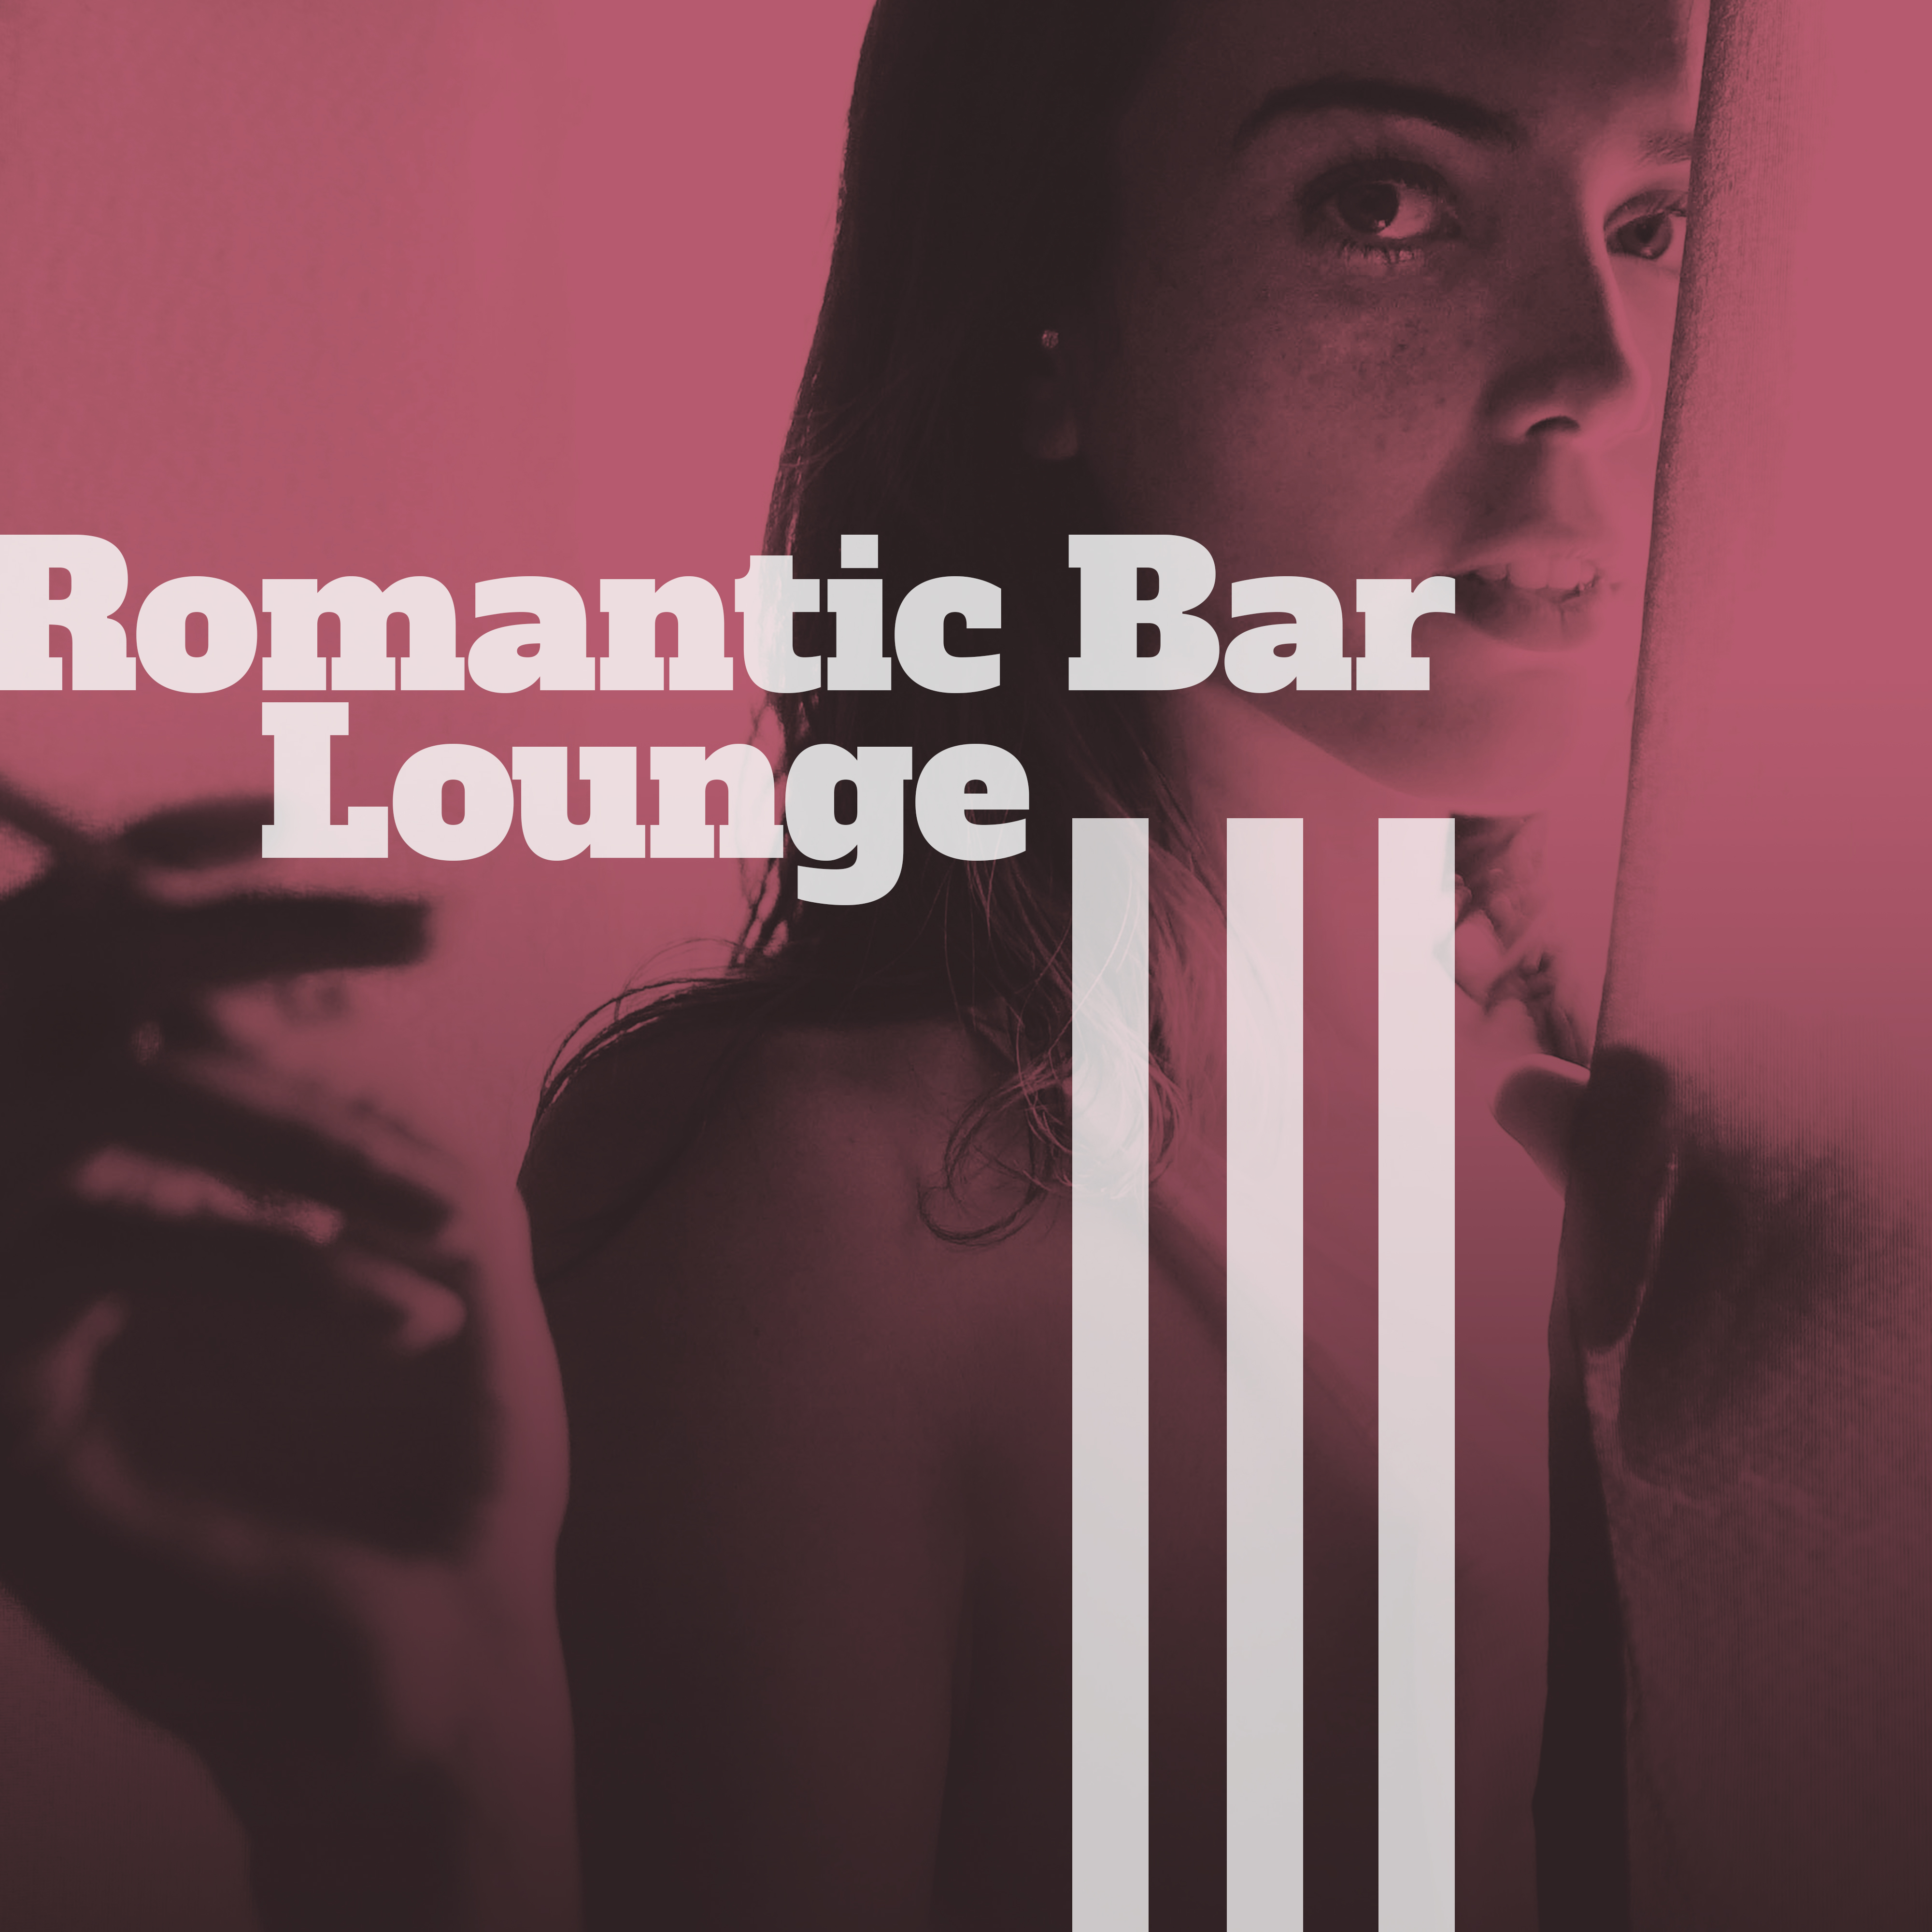 Romantic Bar Lounge  Relaxed Jazz, Wine Bar, Sensual Piano Sounds, Instrumental Music